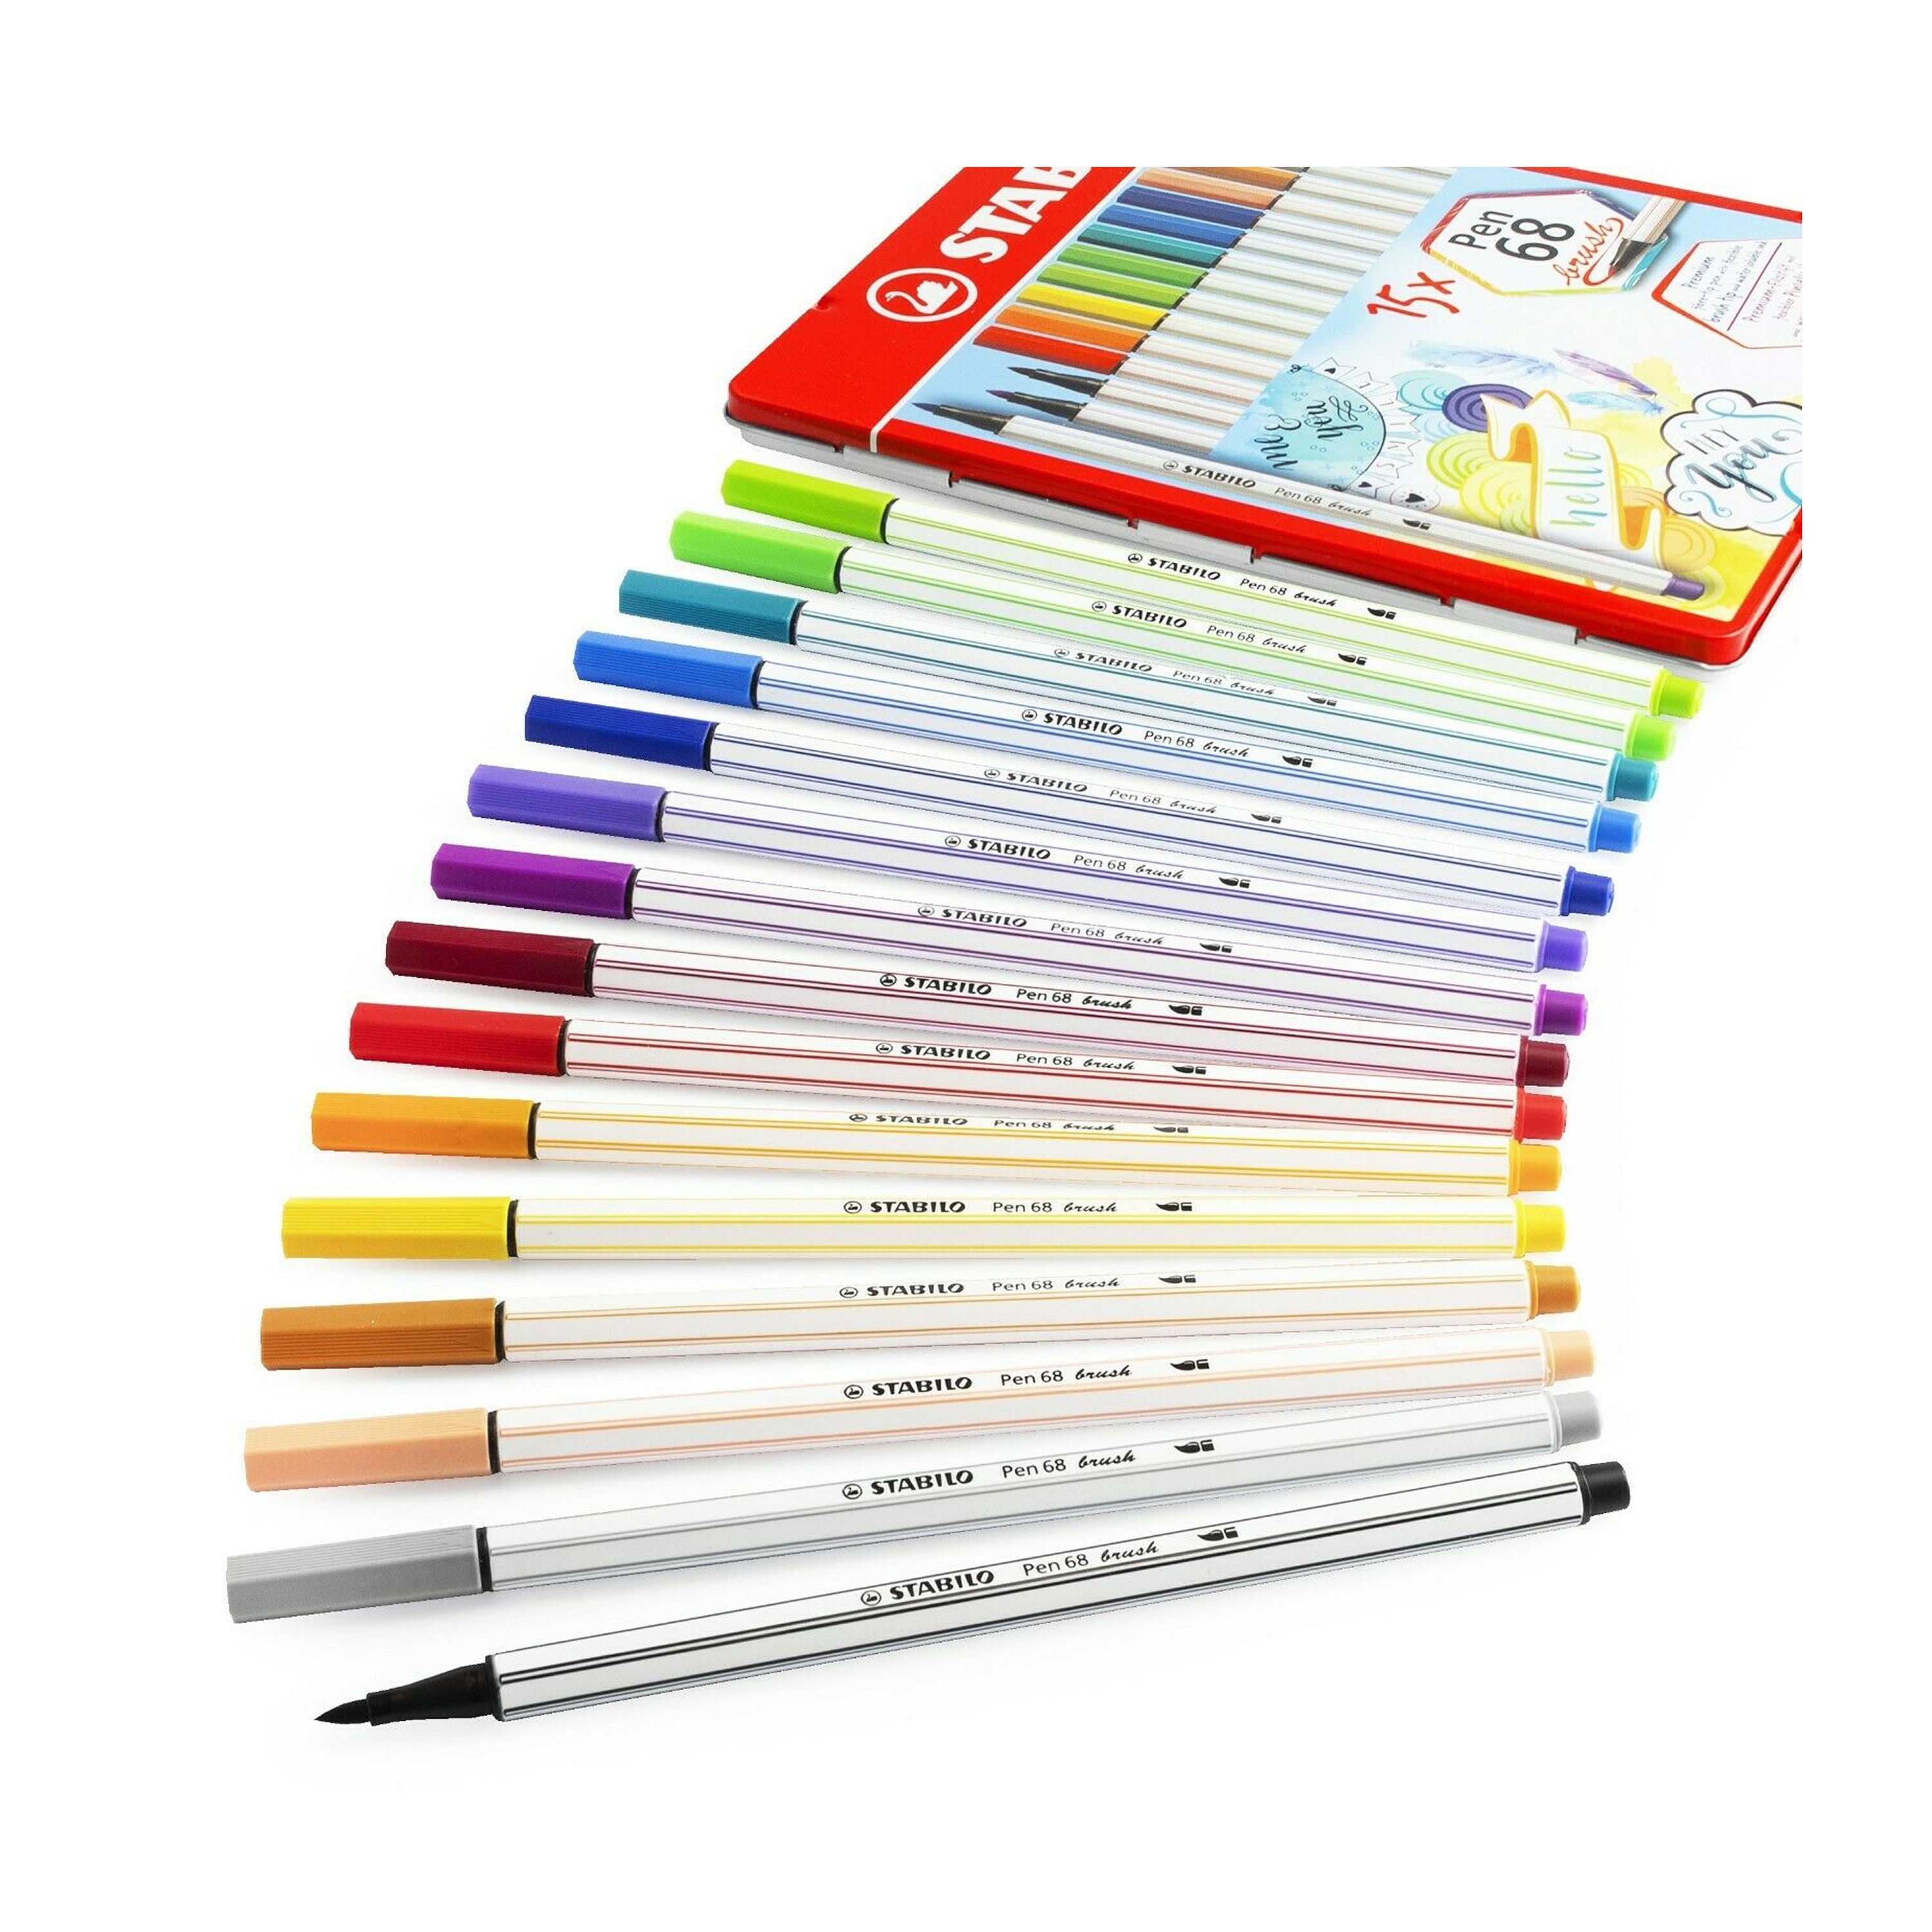 Premium Fibre-Tip Pen STABILO Pen 68 Brush Wallet of 24 Assorted Colours 